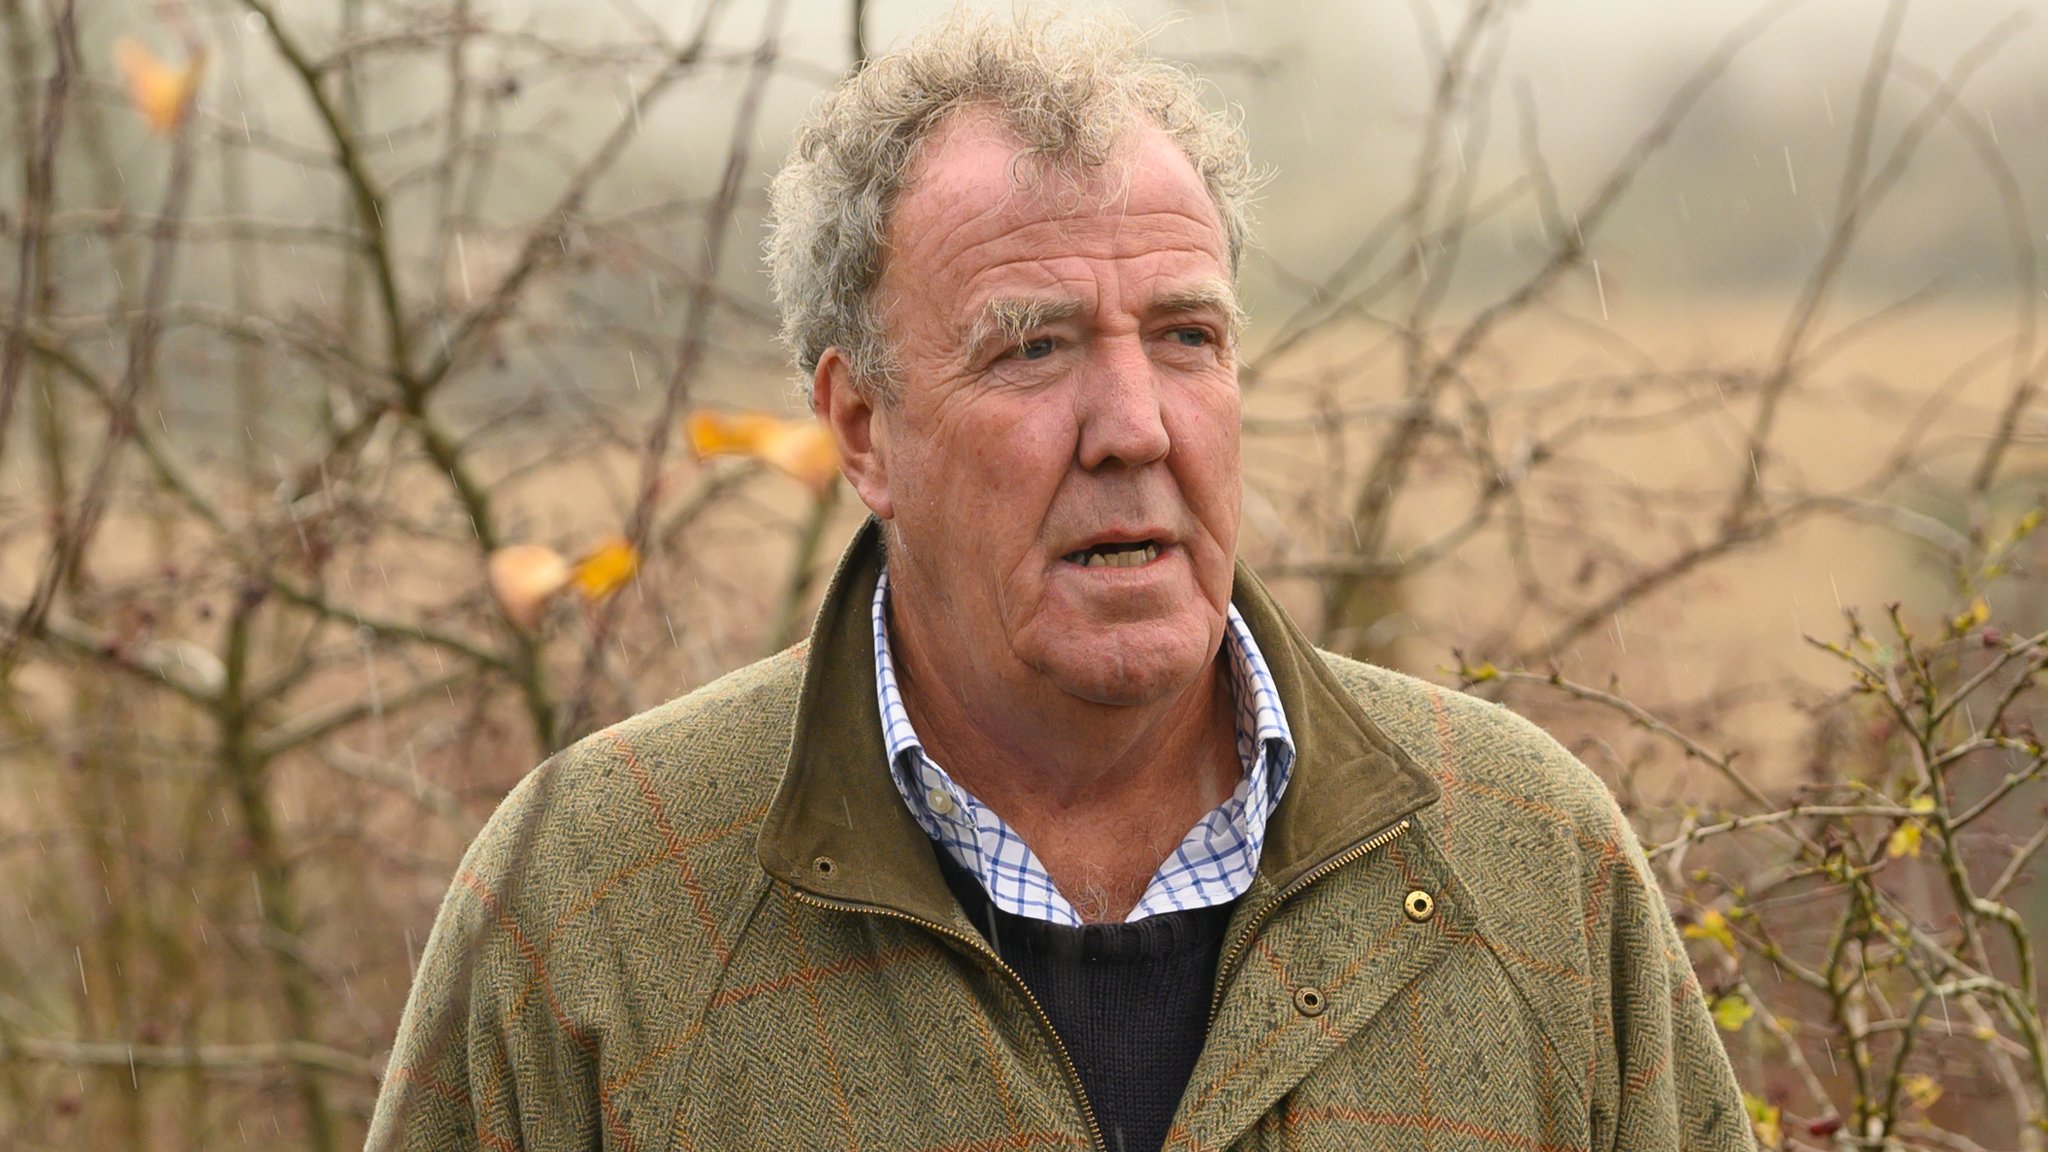 Clarkson filming farming TV series - BBC News